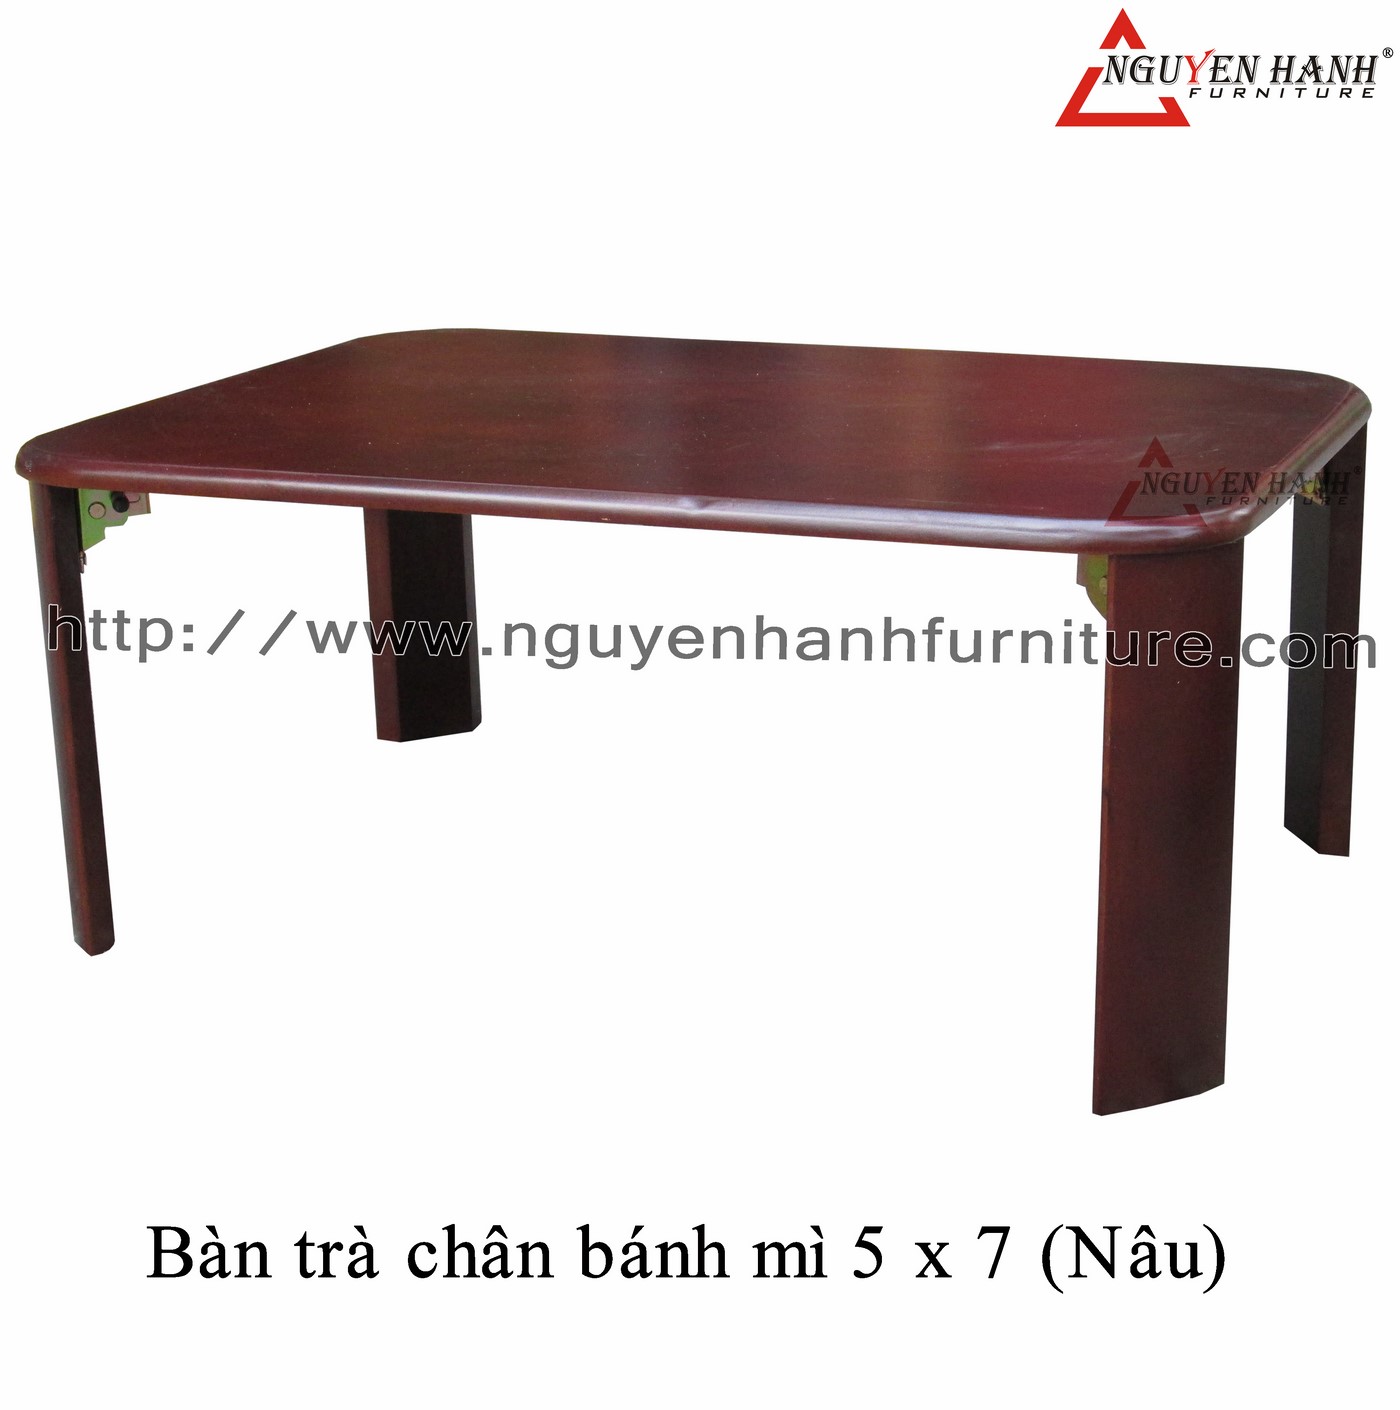 Name product: 5 x 7 Bread shape Tea table (brown) - Dimensions: 50 x 70 x 30 (H) - Description: Wood natural rubber